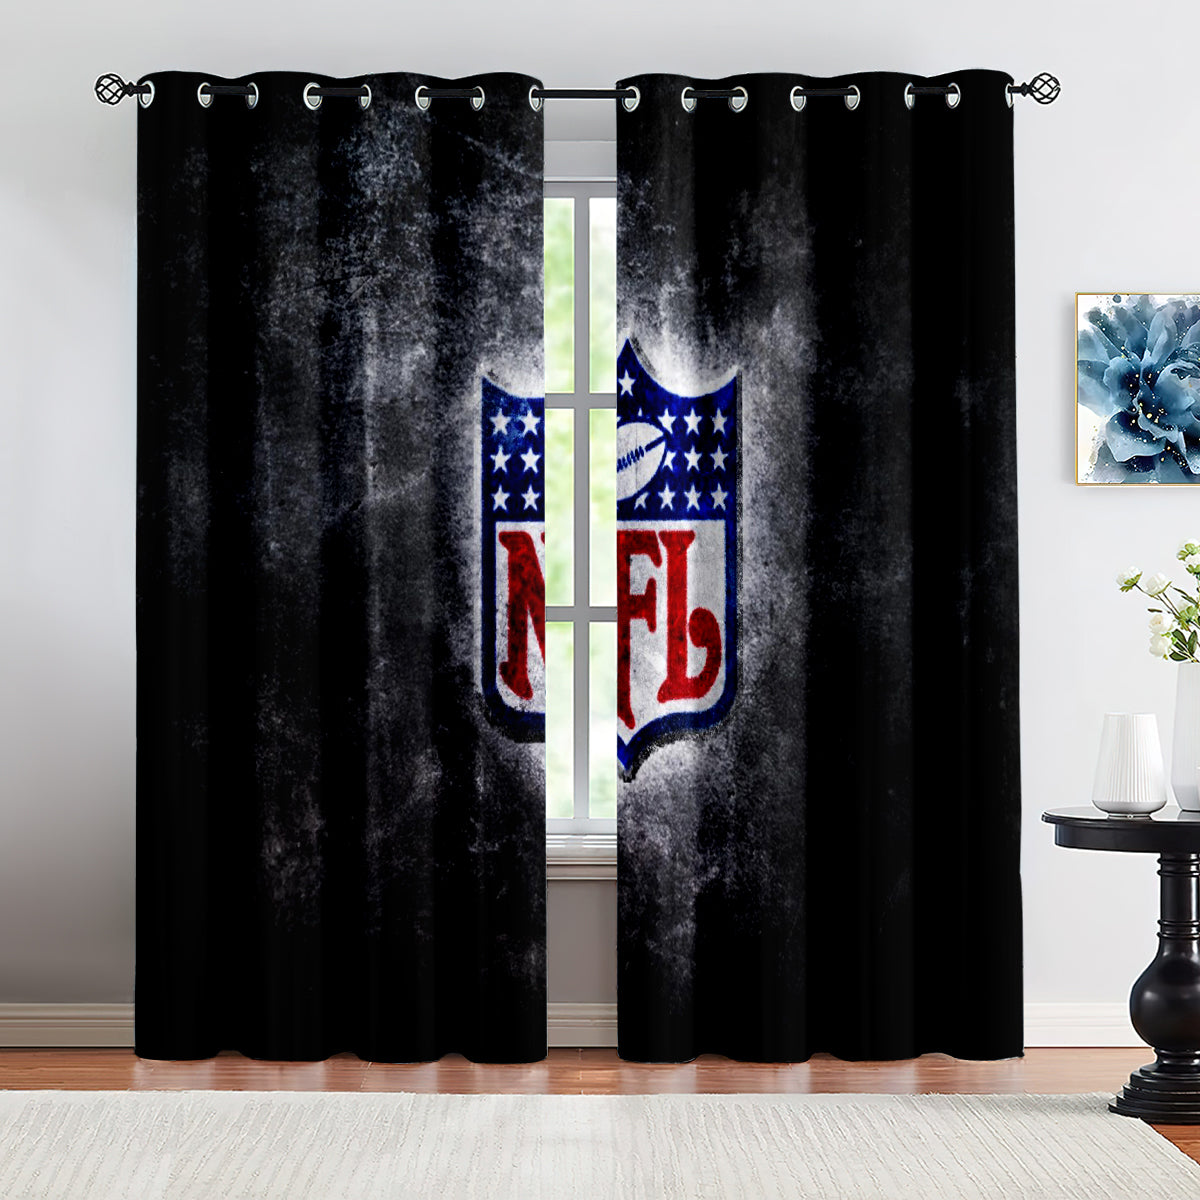 Football League Blackout Curtains Drapes for Window Treatment Set